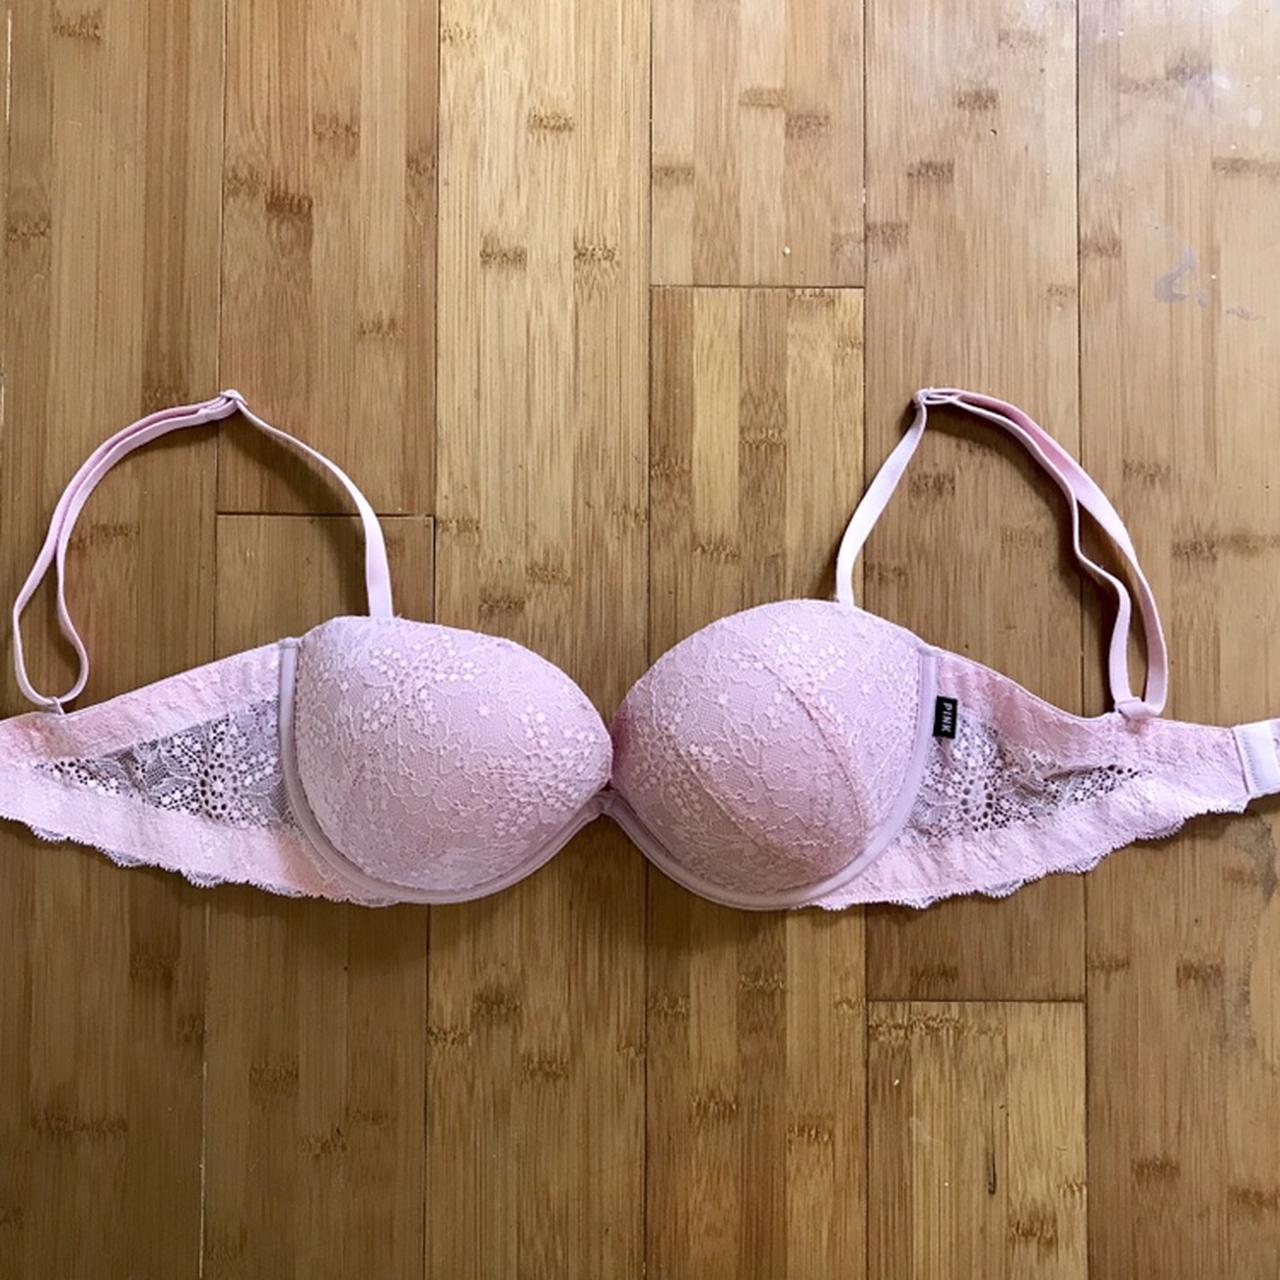 Victoria's Secret/ PINK bras - multi color push up - Depop